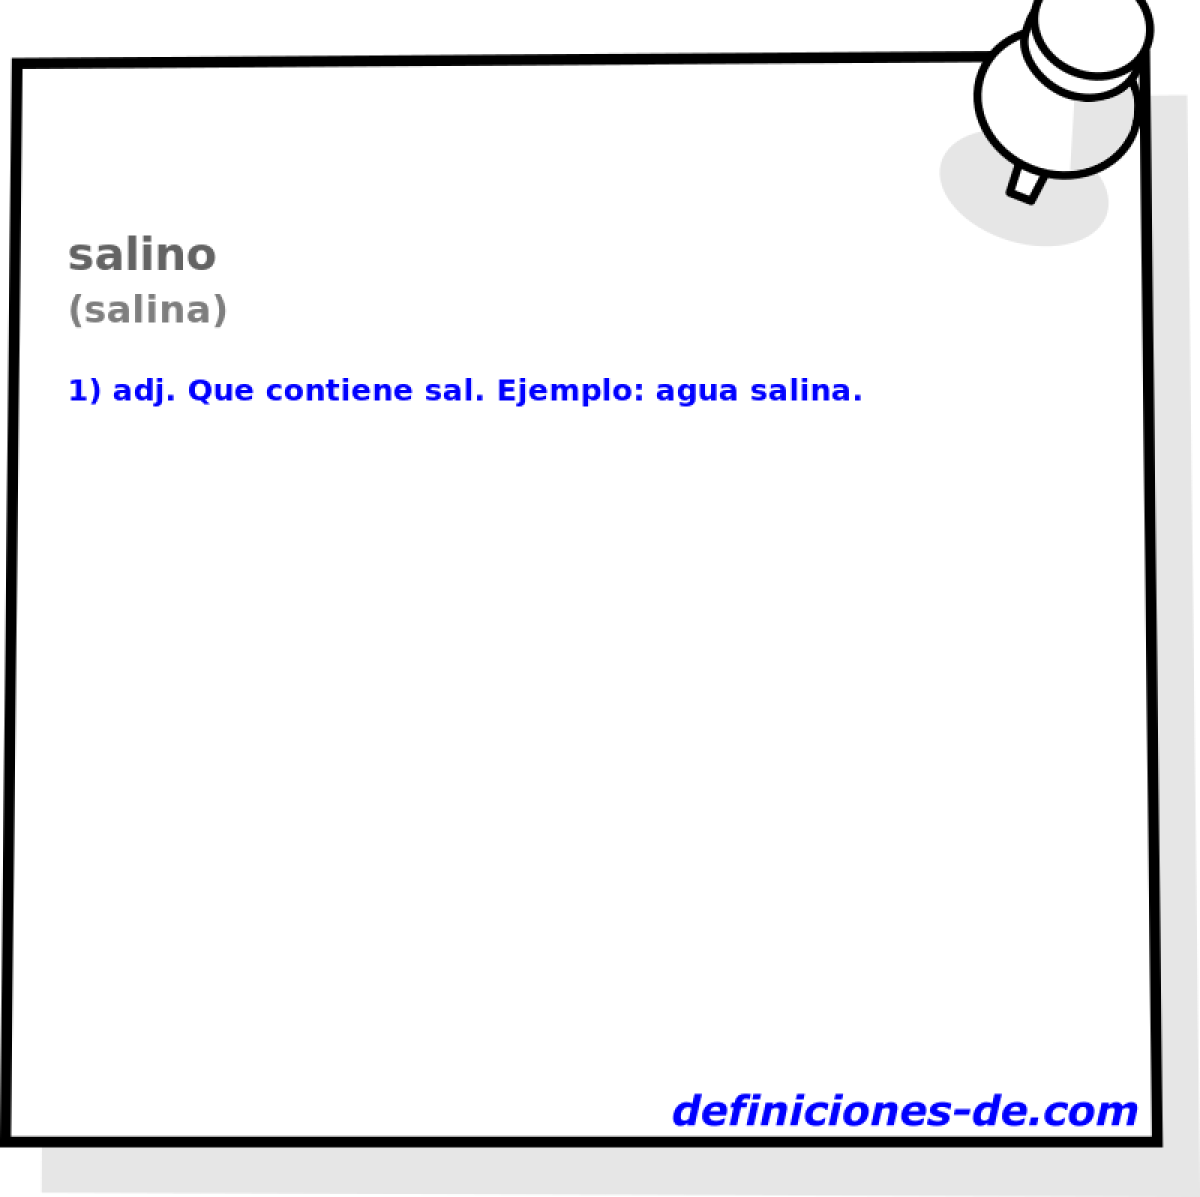 salino (salina)